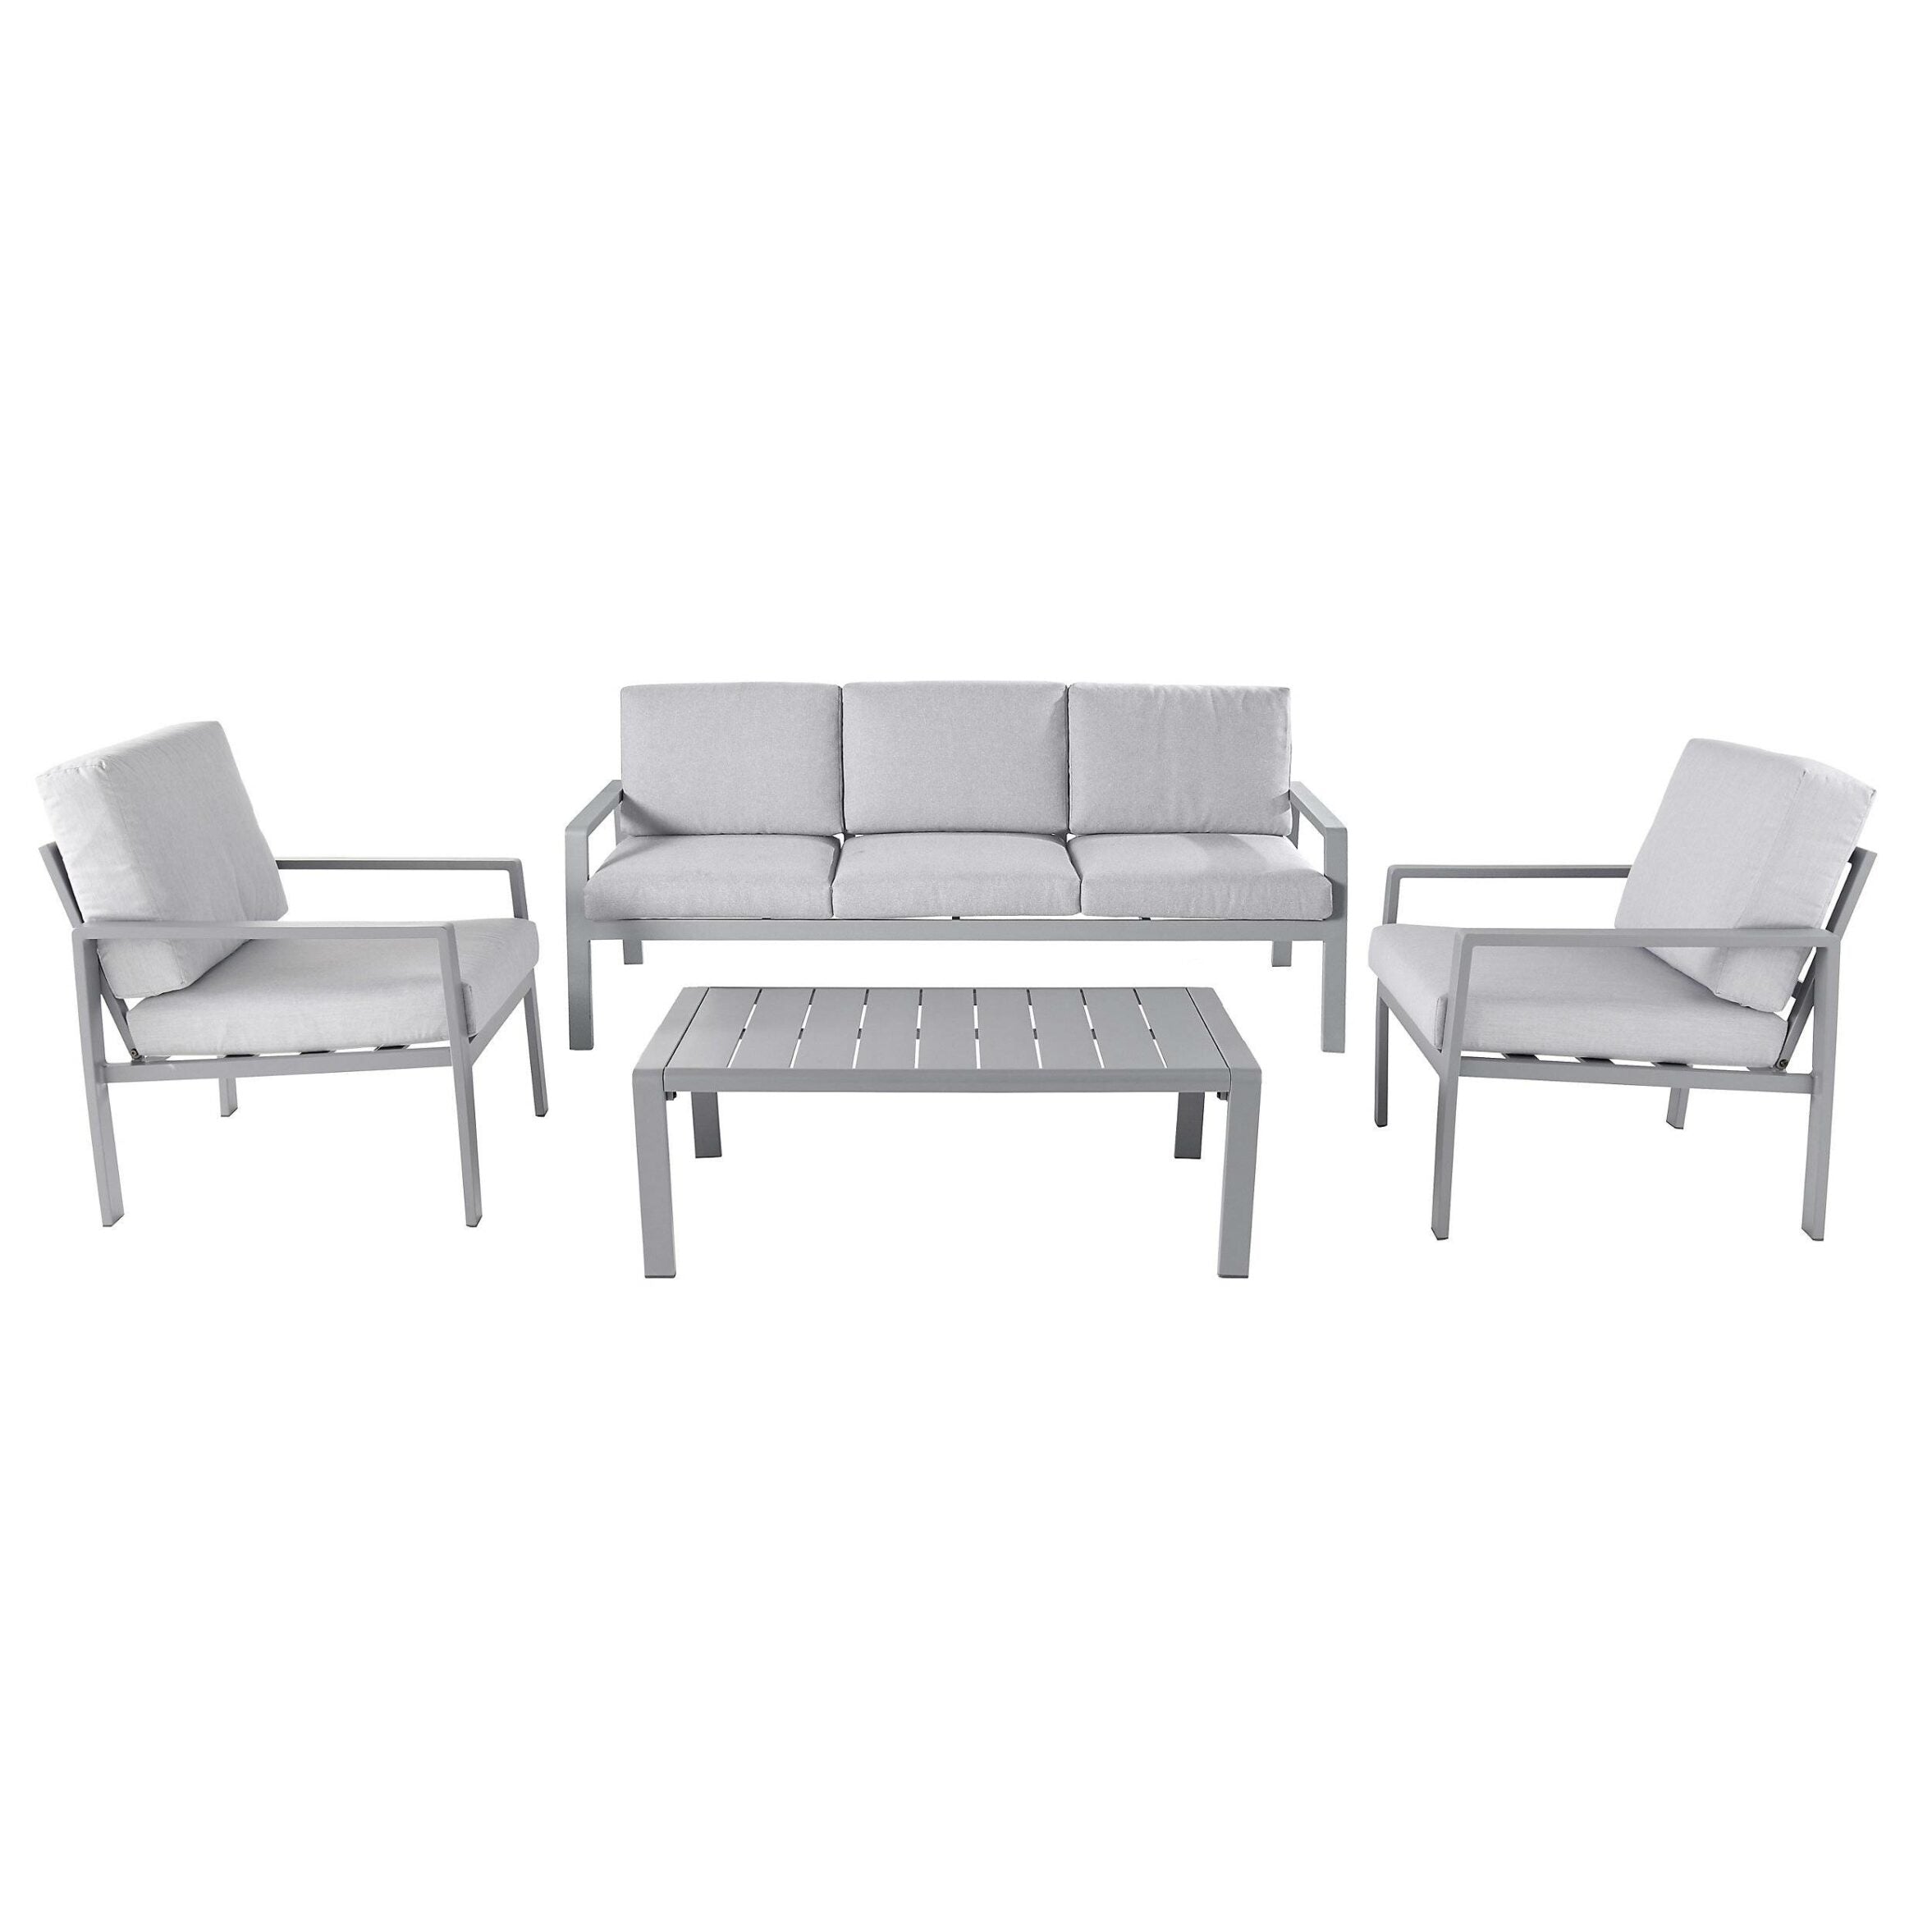 GoodHome Moorea Steel grey 5 Seater Coffee set- Garden Furniture Cosmetic Mark 2865